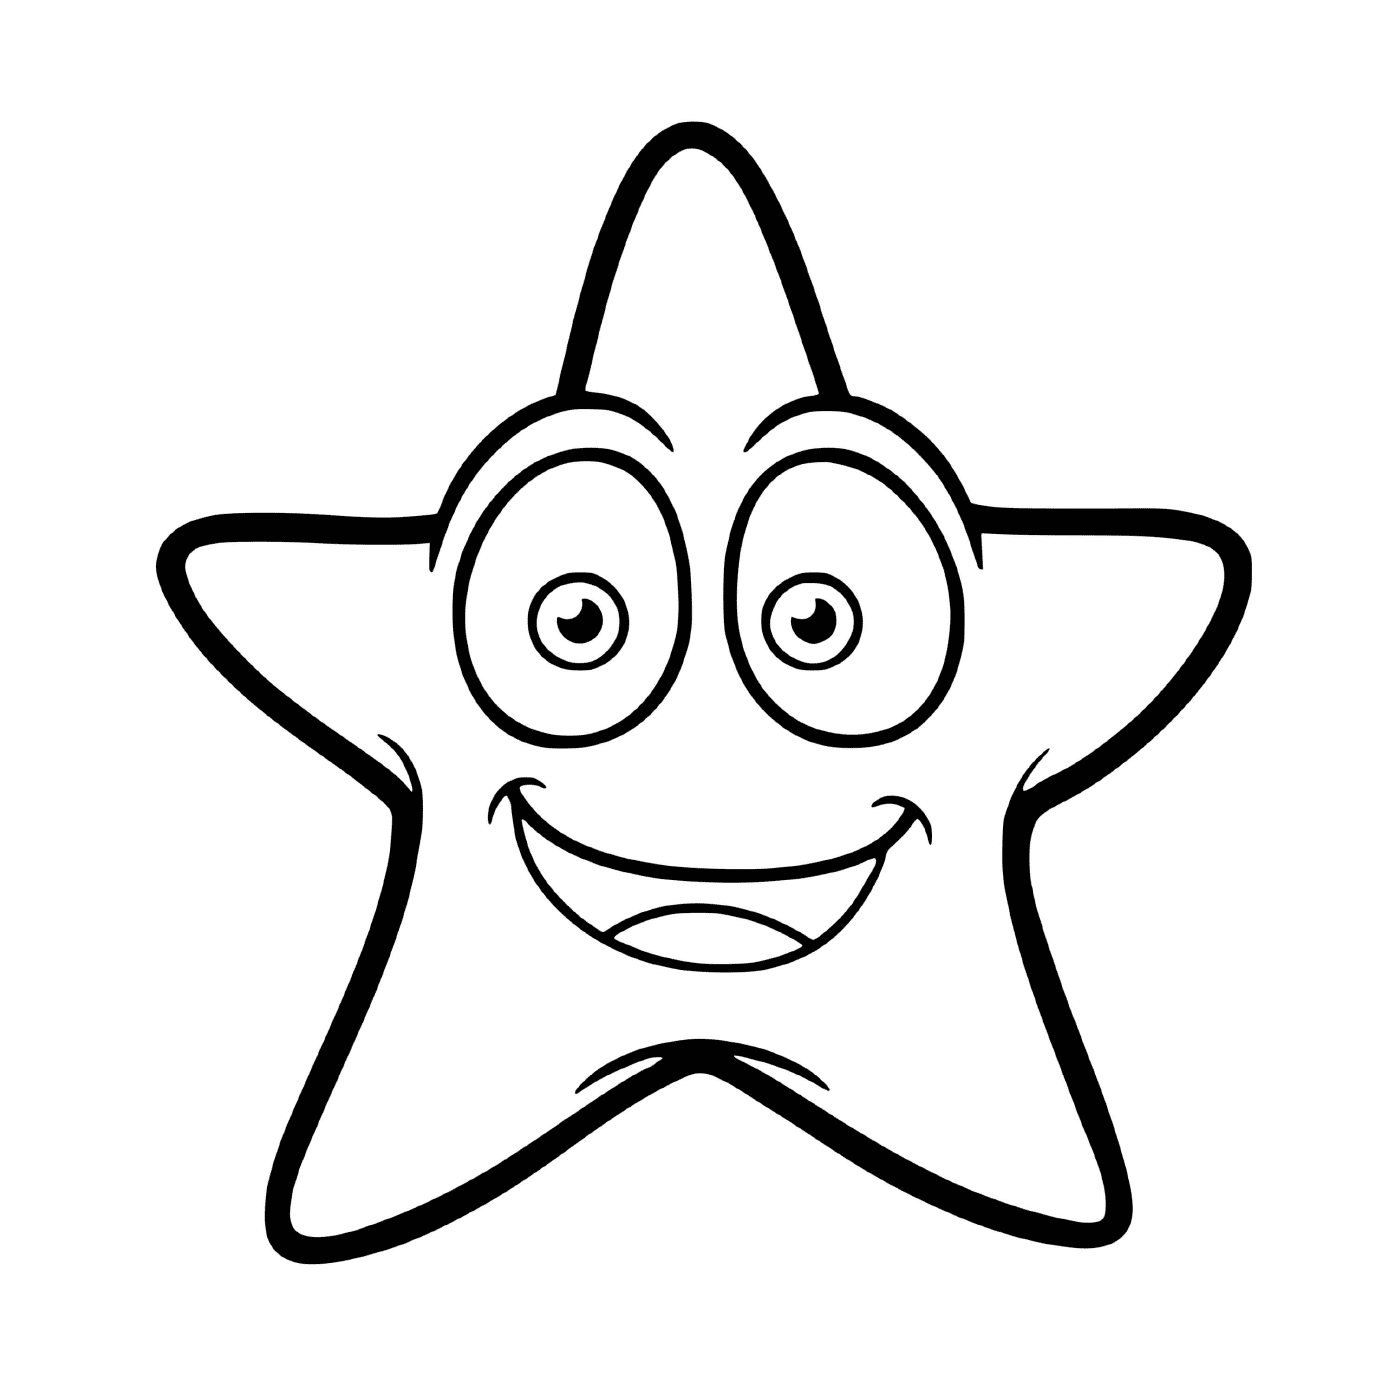  A smiling starfish among the marine animals 